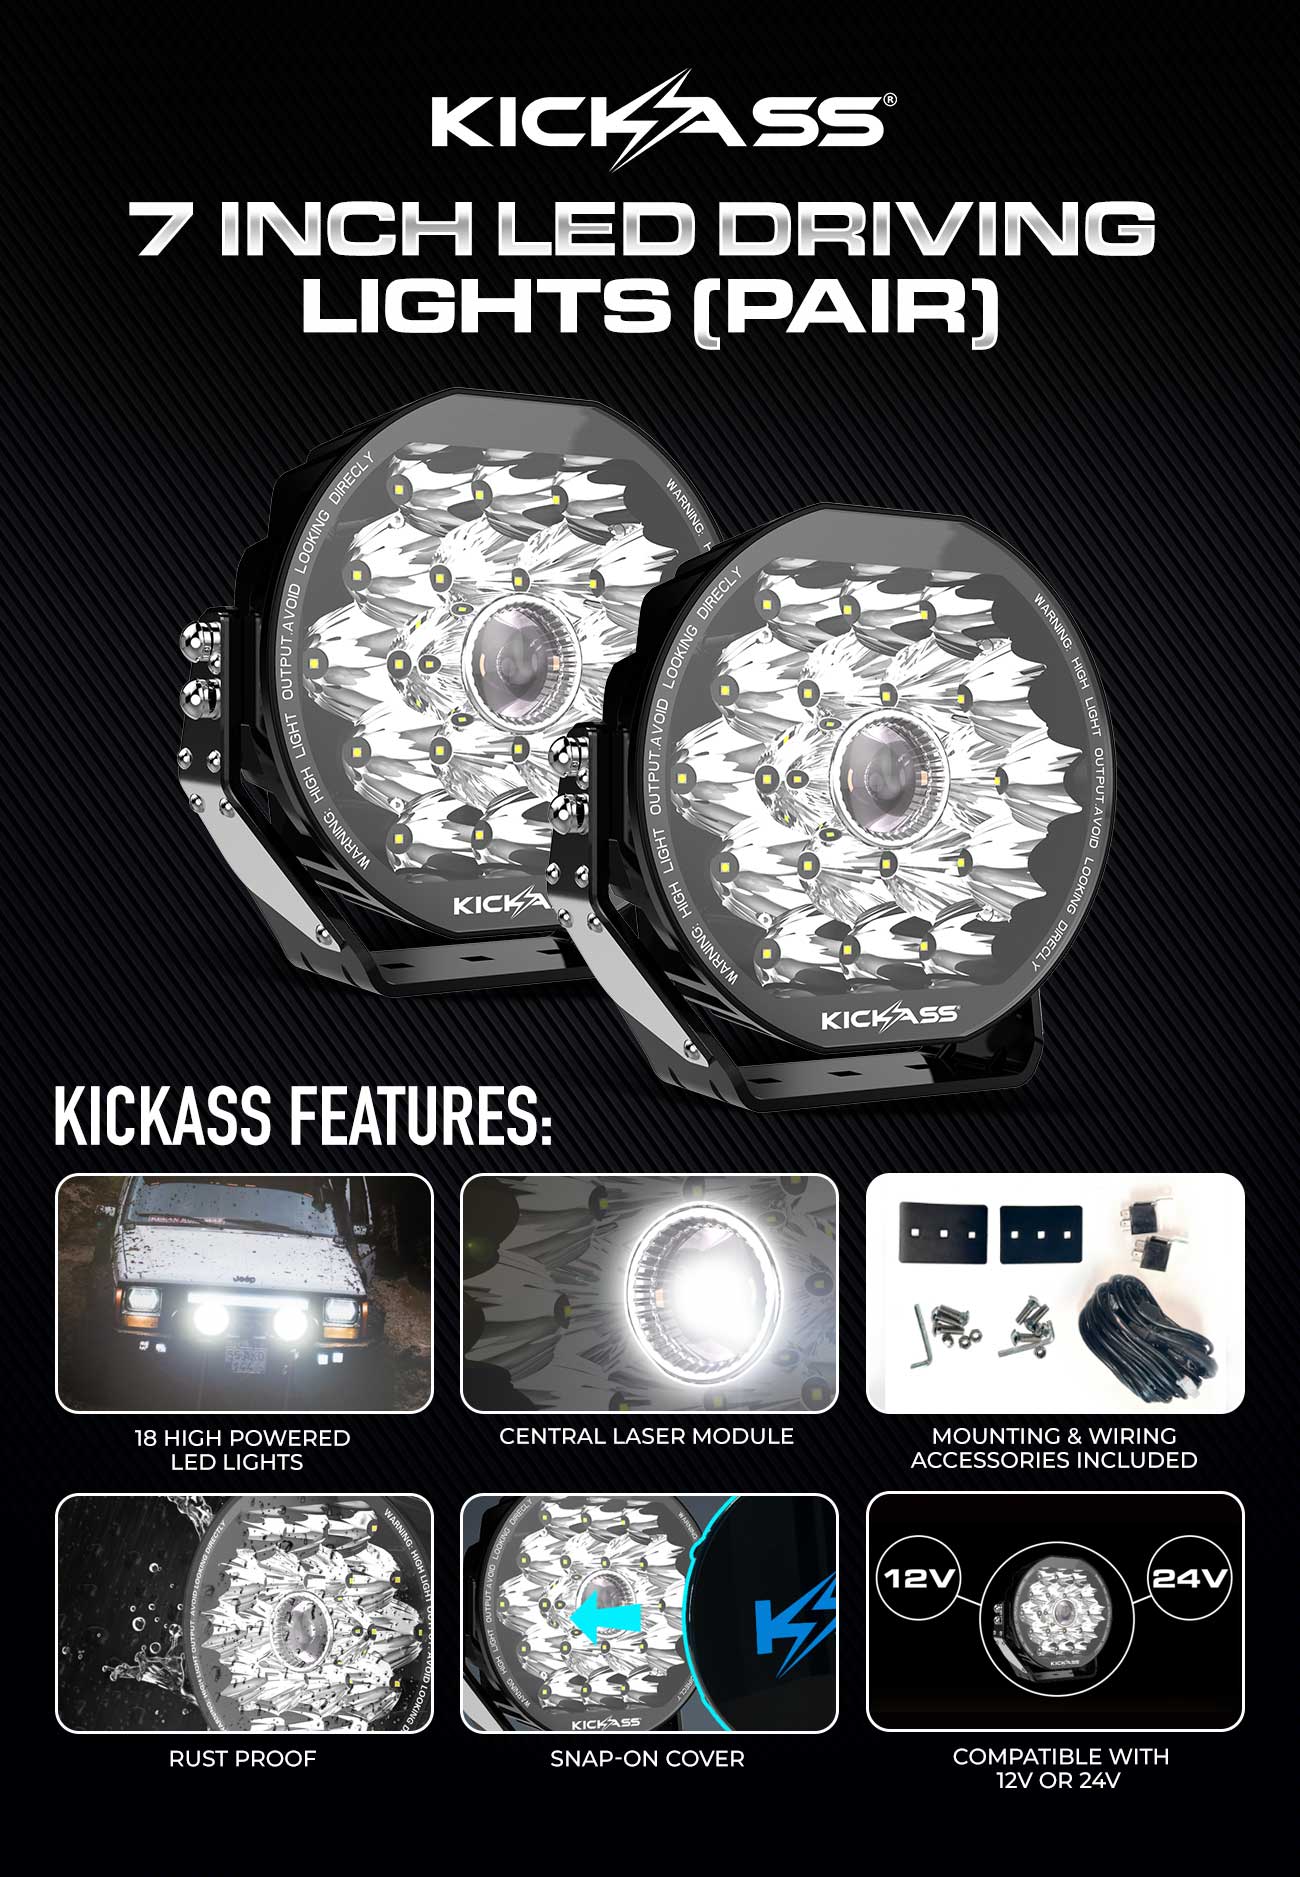 KickAss 7 Inch LED Driving Lights Pair